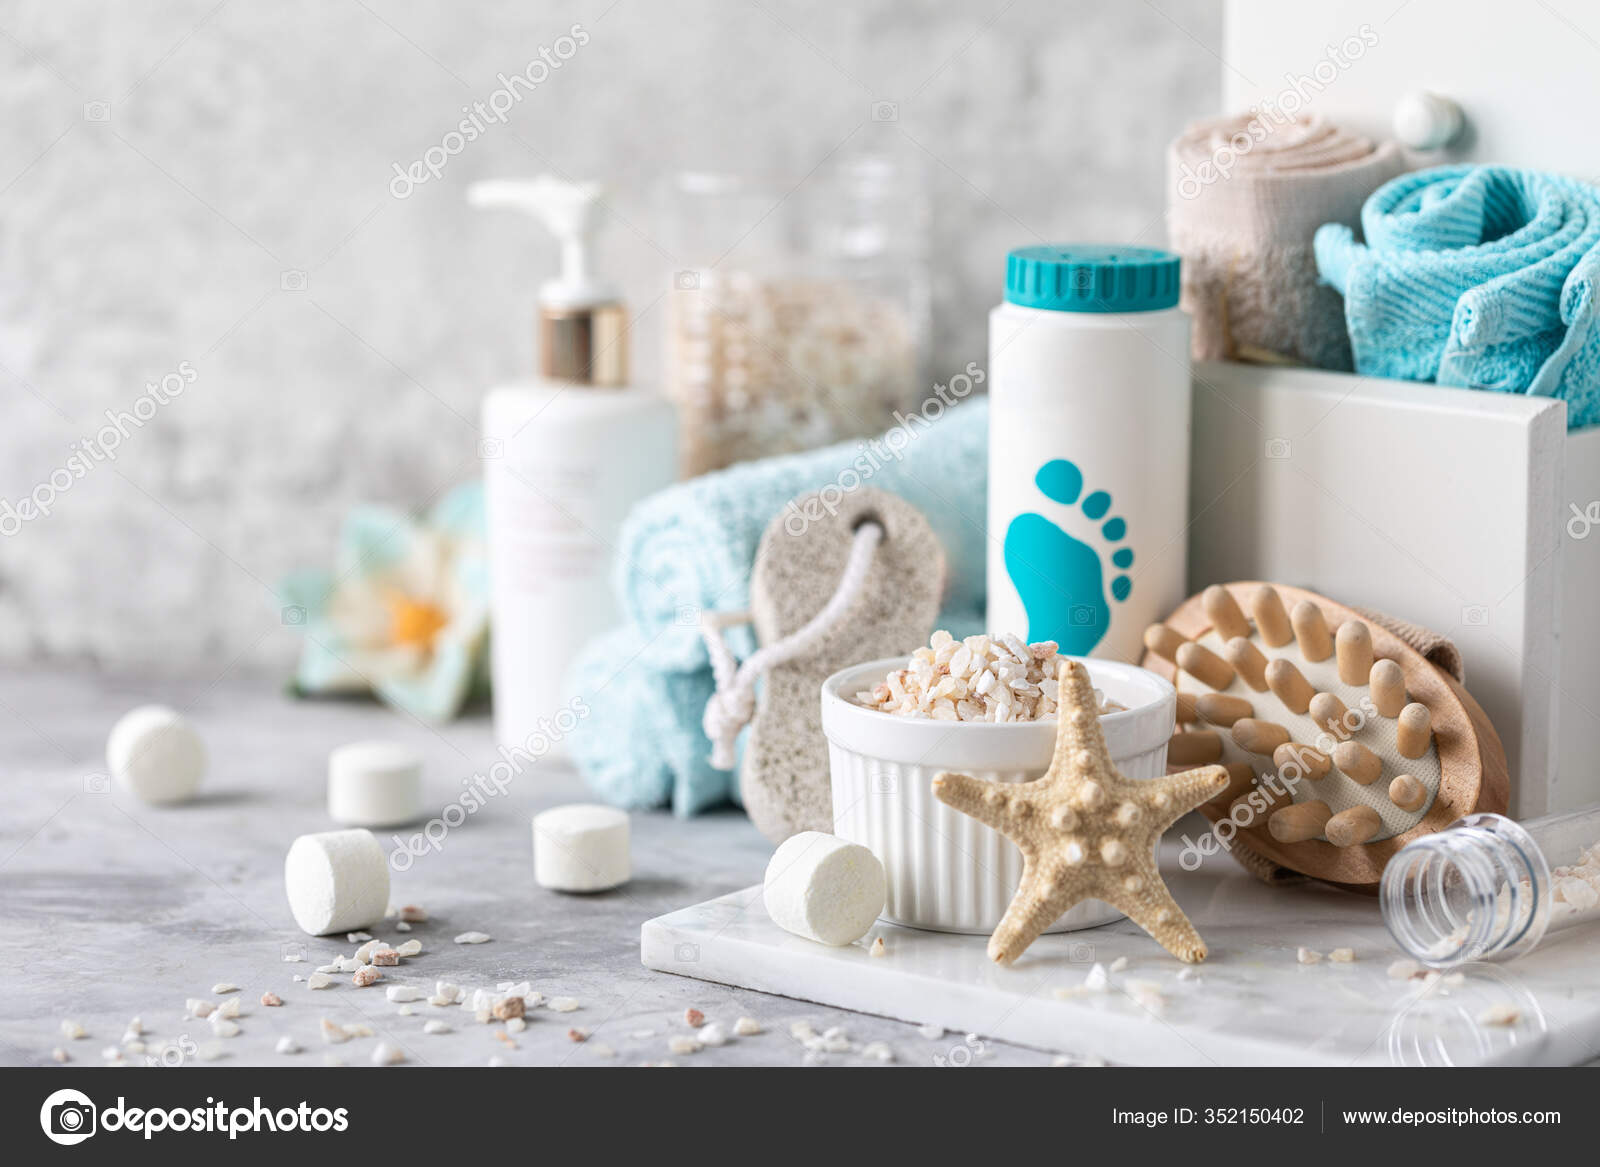 Spa accessories - sea salt, brush, powder, effervescent bath